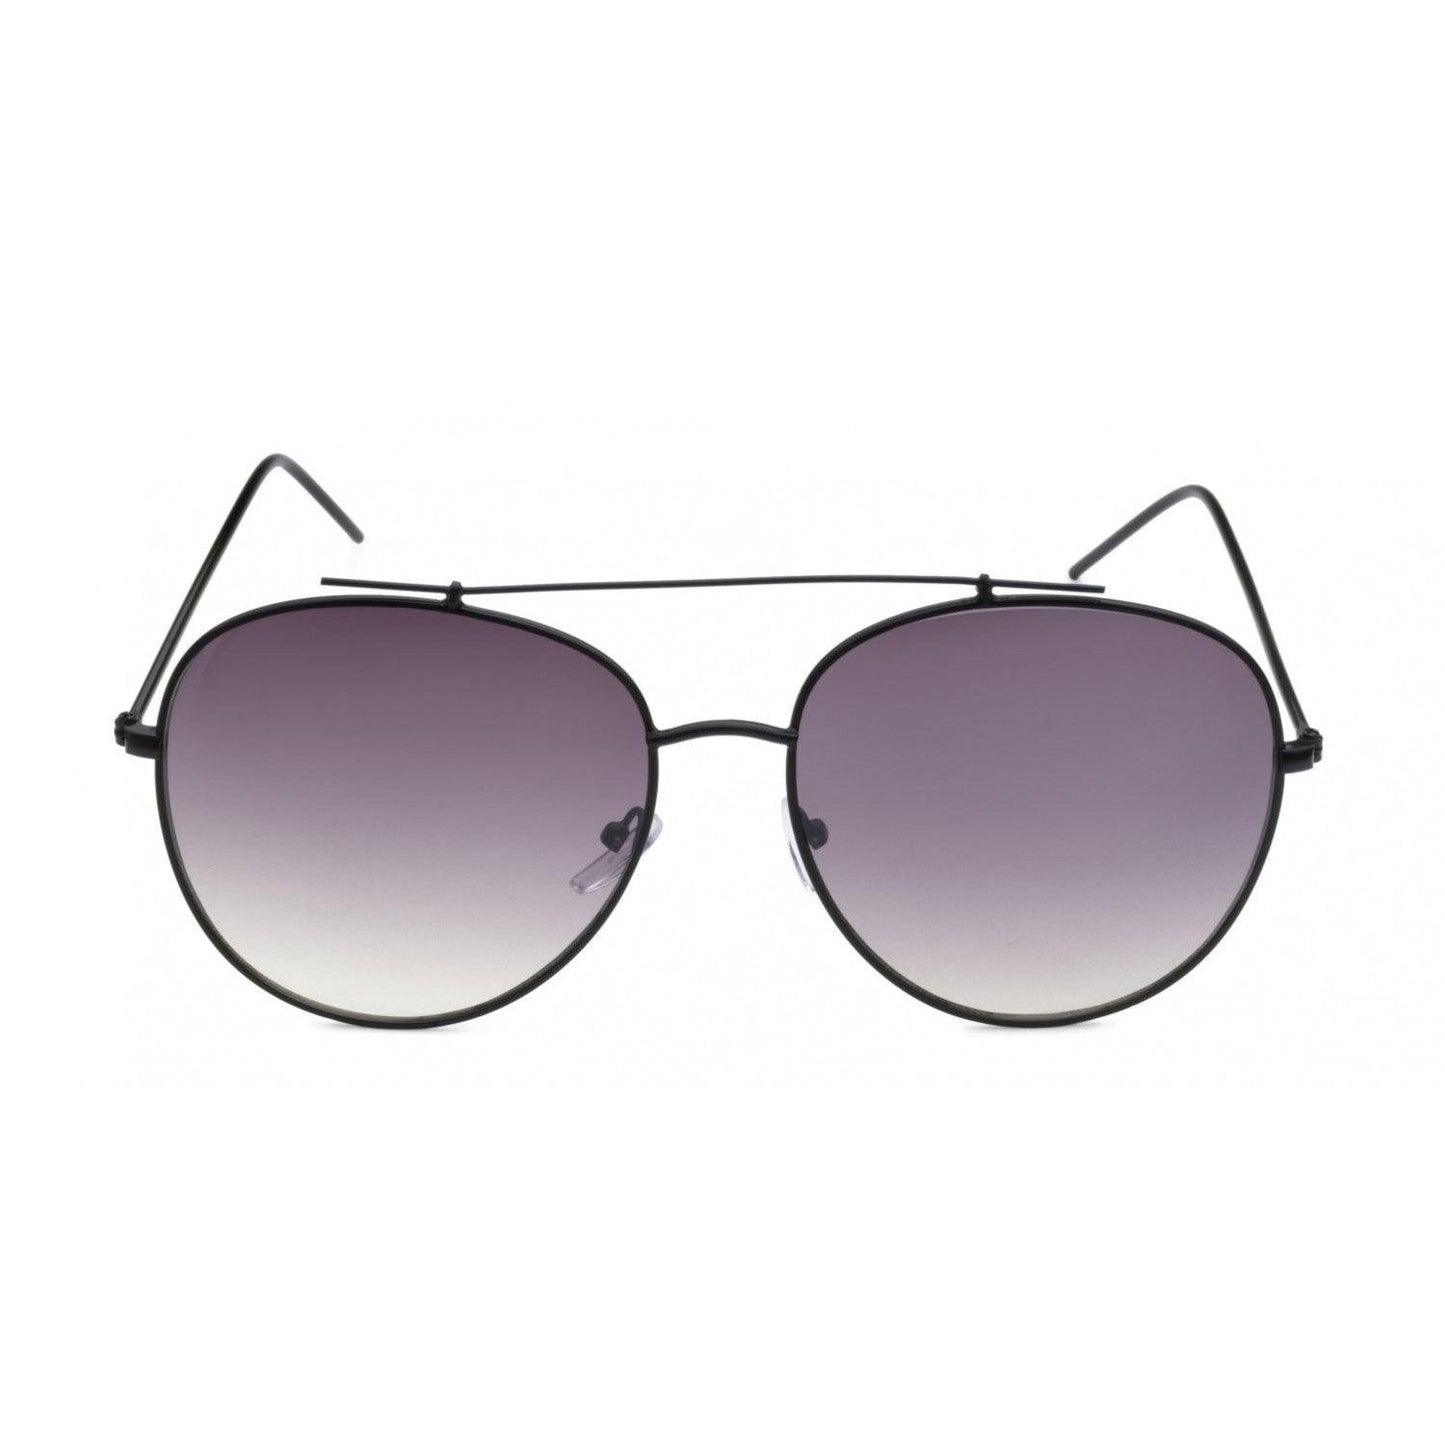 "READY" Round Metal Sunglasses - Weekend Shade Sunglasses